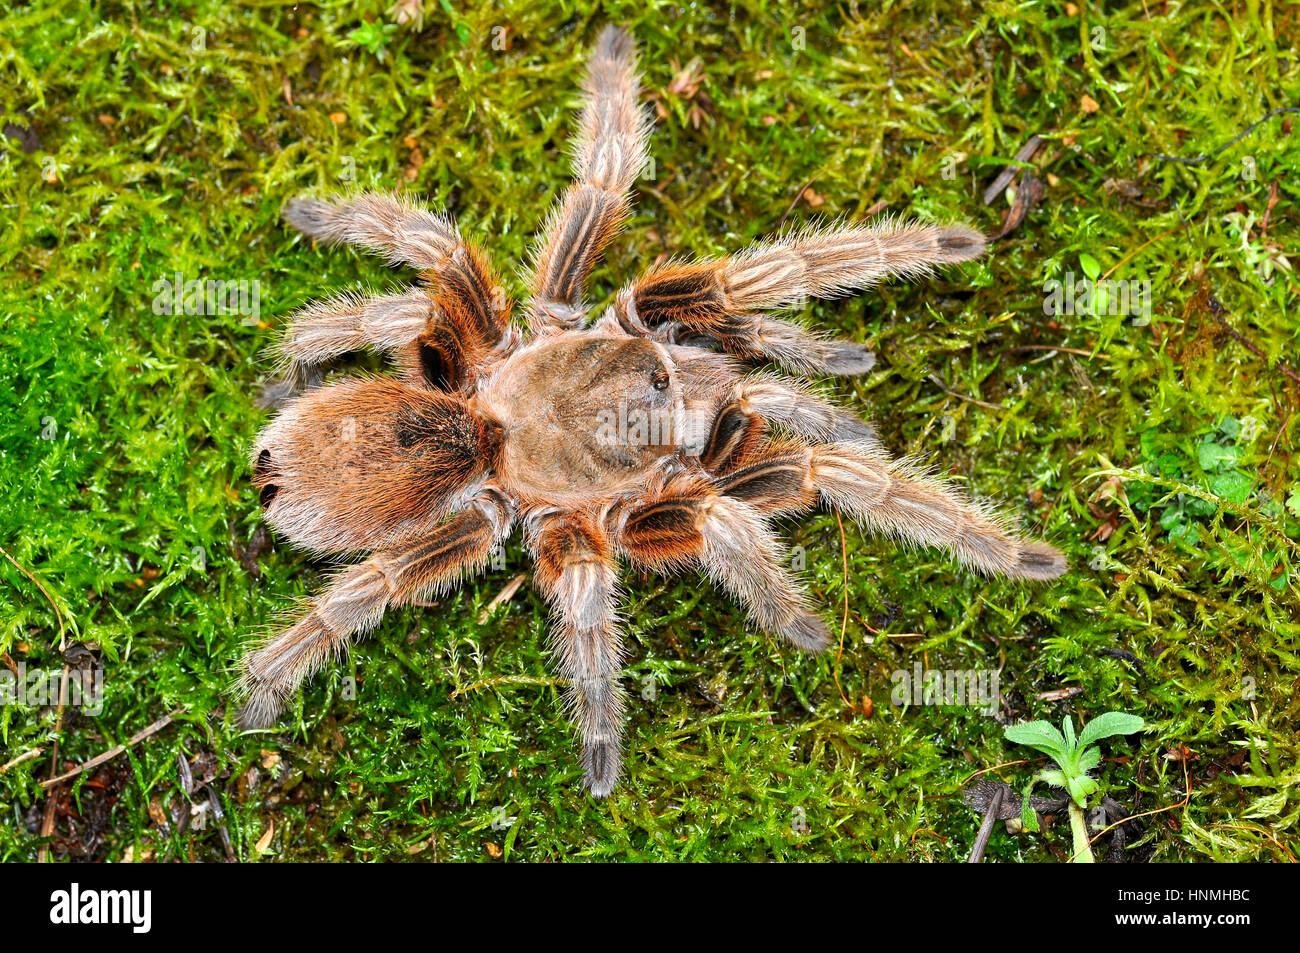 Chilean rose tarantula silk hi-res stock photography and images - Alamy